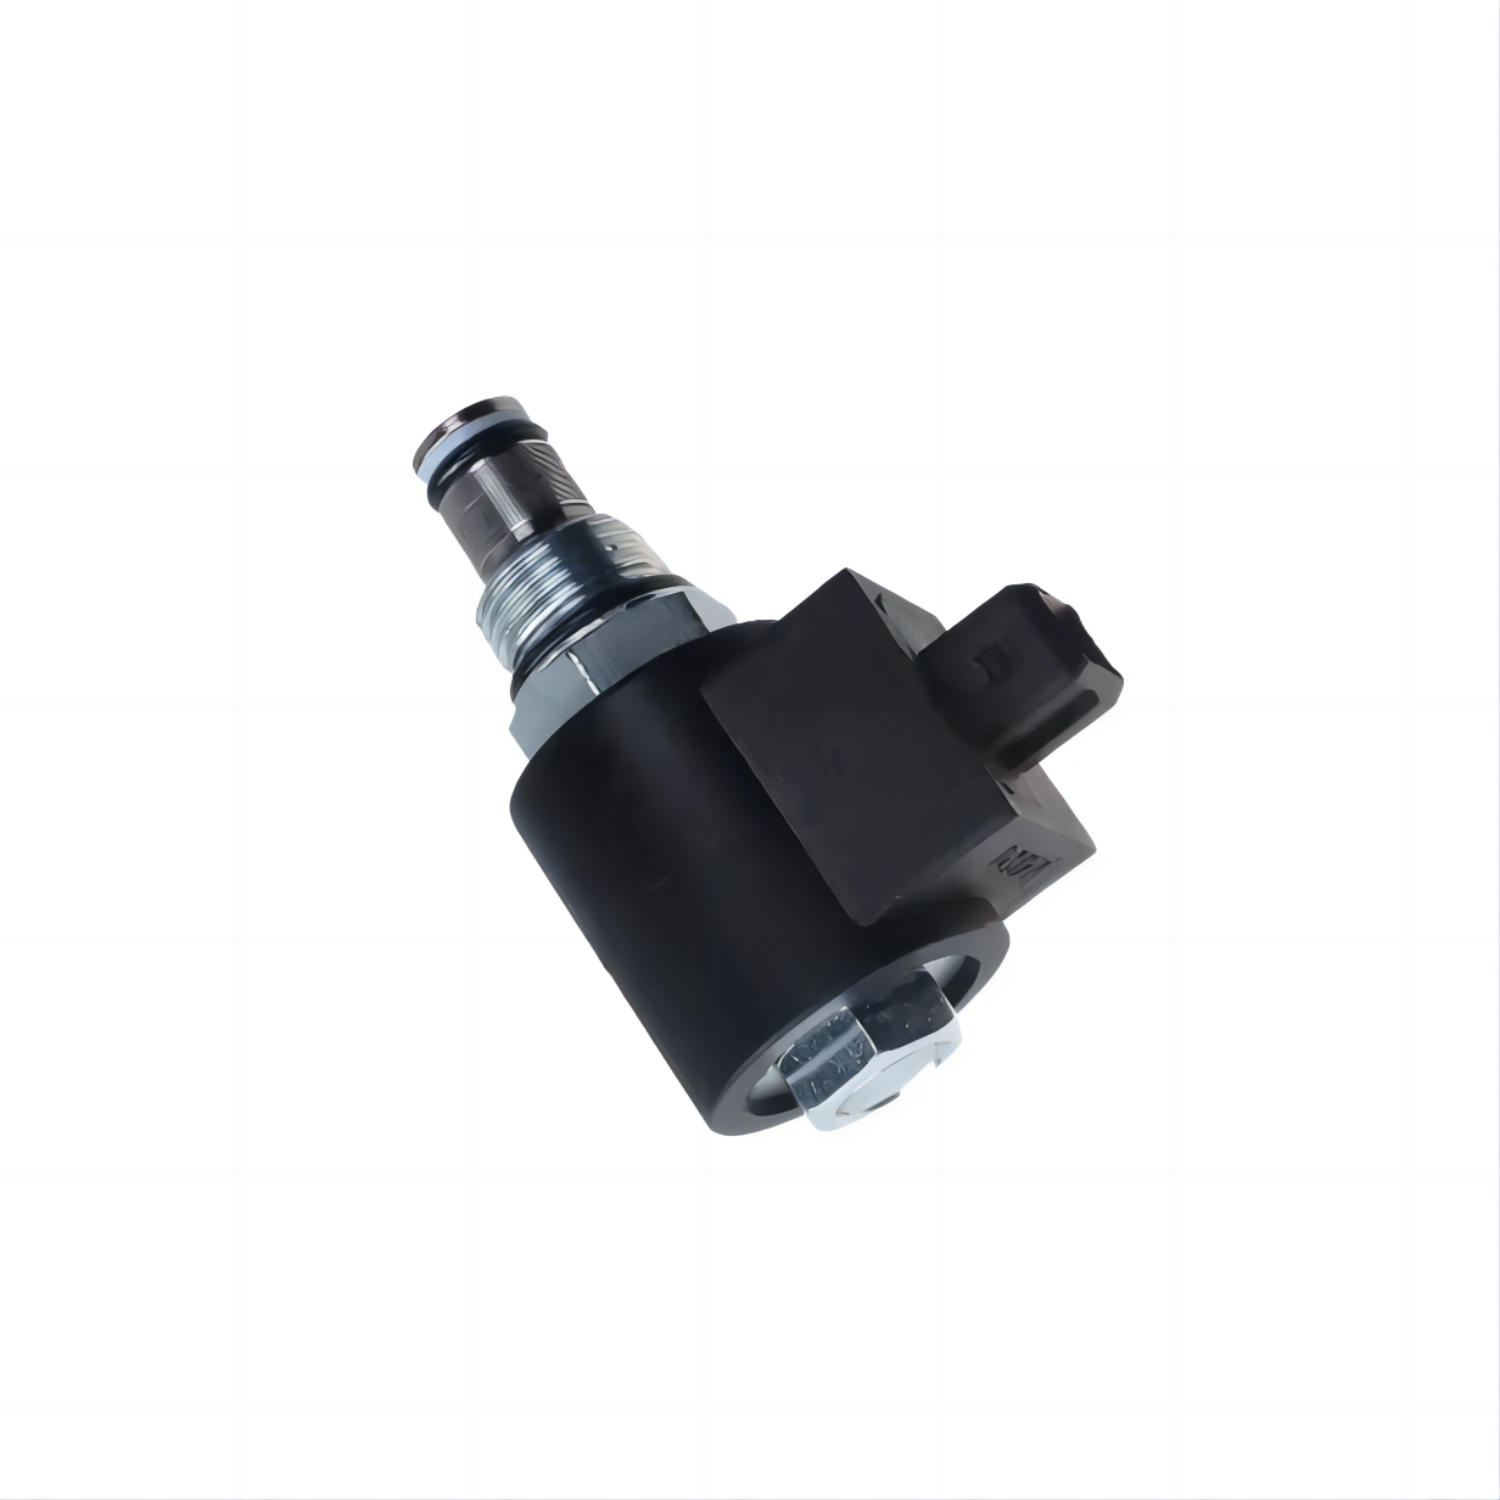 Excavator solenoid valve hydraulic twj tso kua mis 12V 25/974628 threaded cartridge valve Hydraulic valve